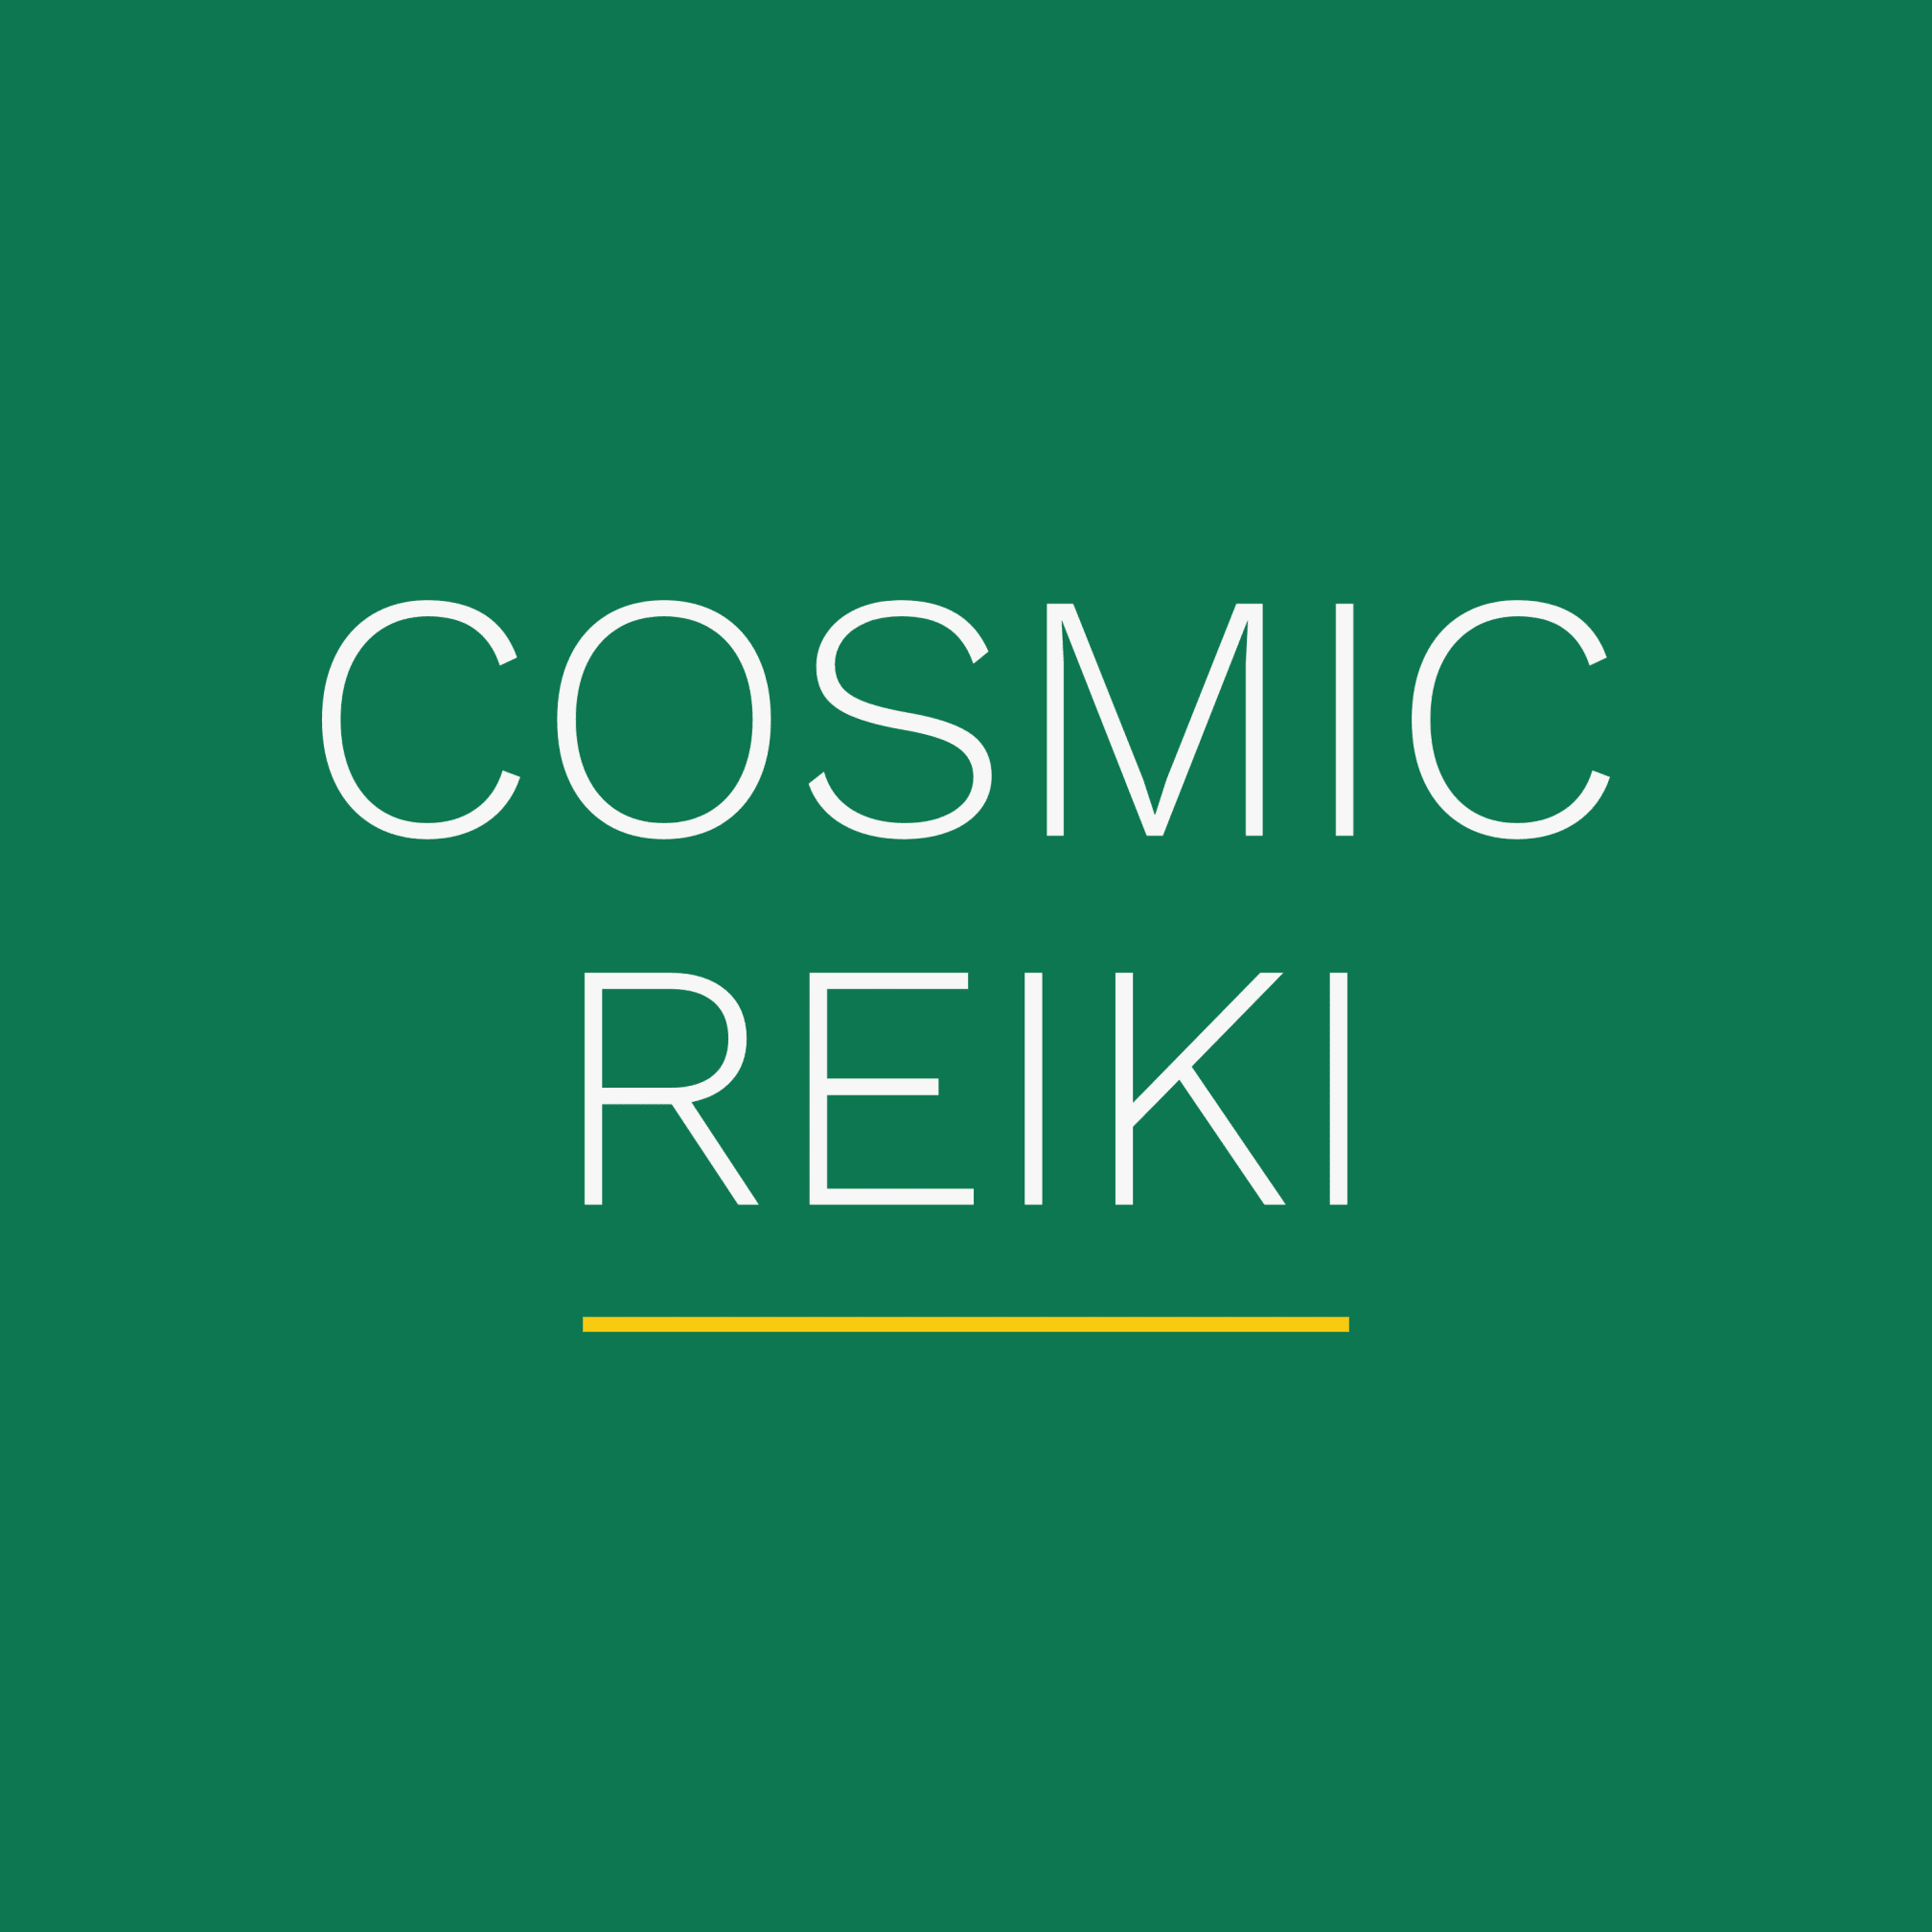 Cosmic Reiki - Wolverhampton, West Midlands - 07944 286907 | ShowMeLocal.com